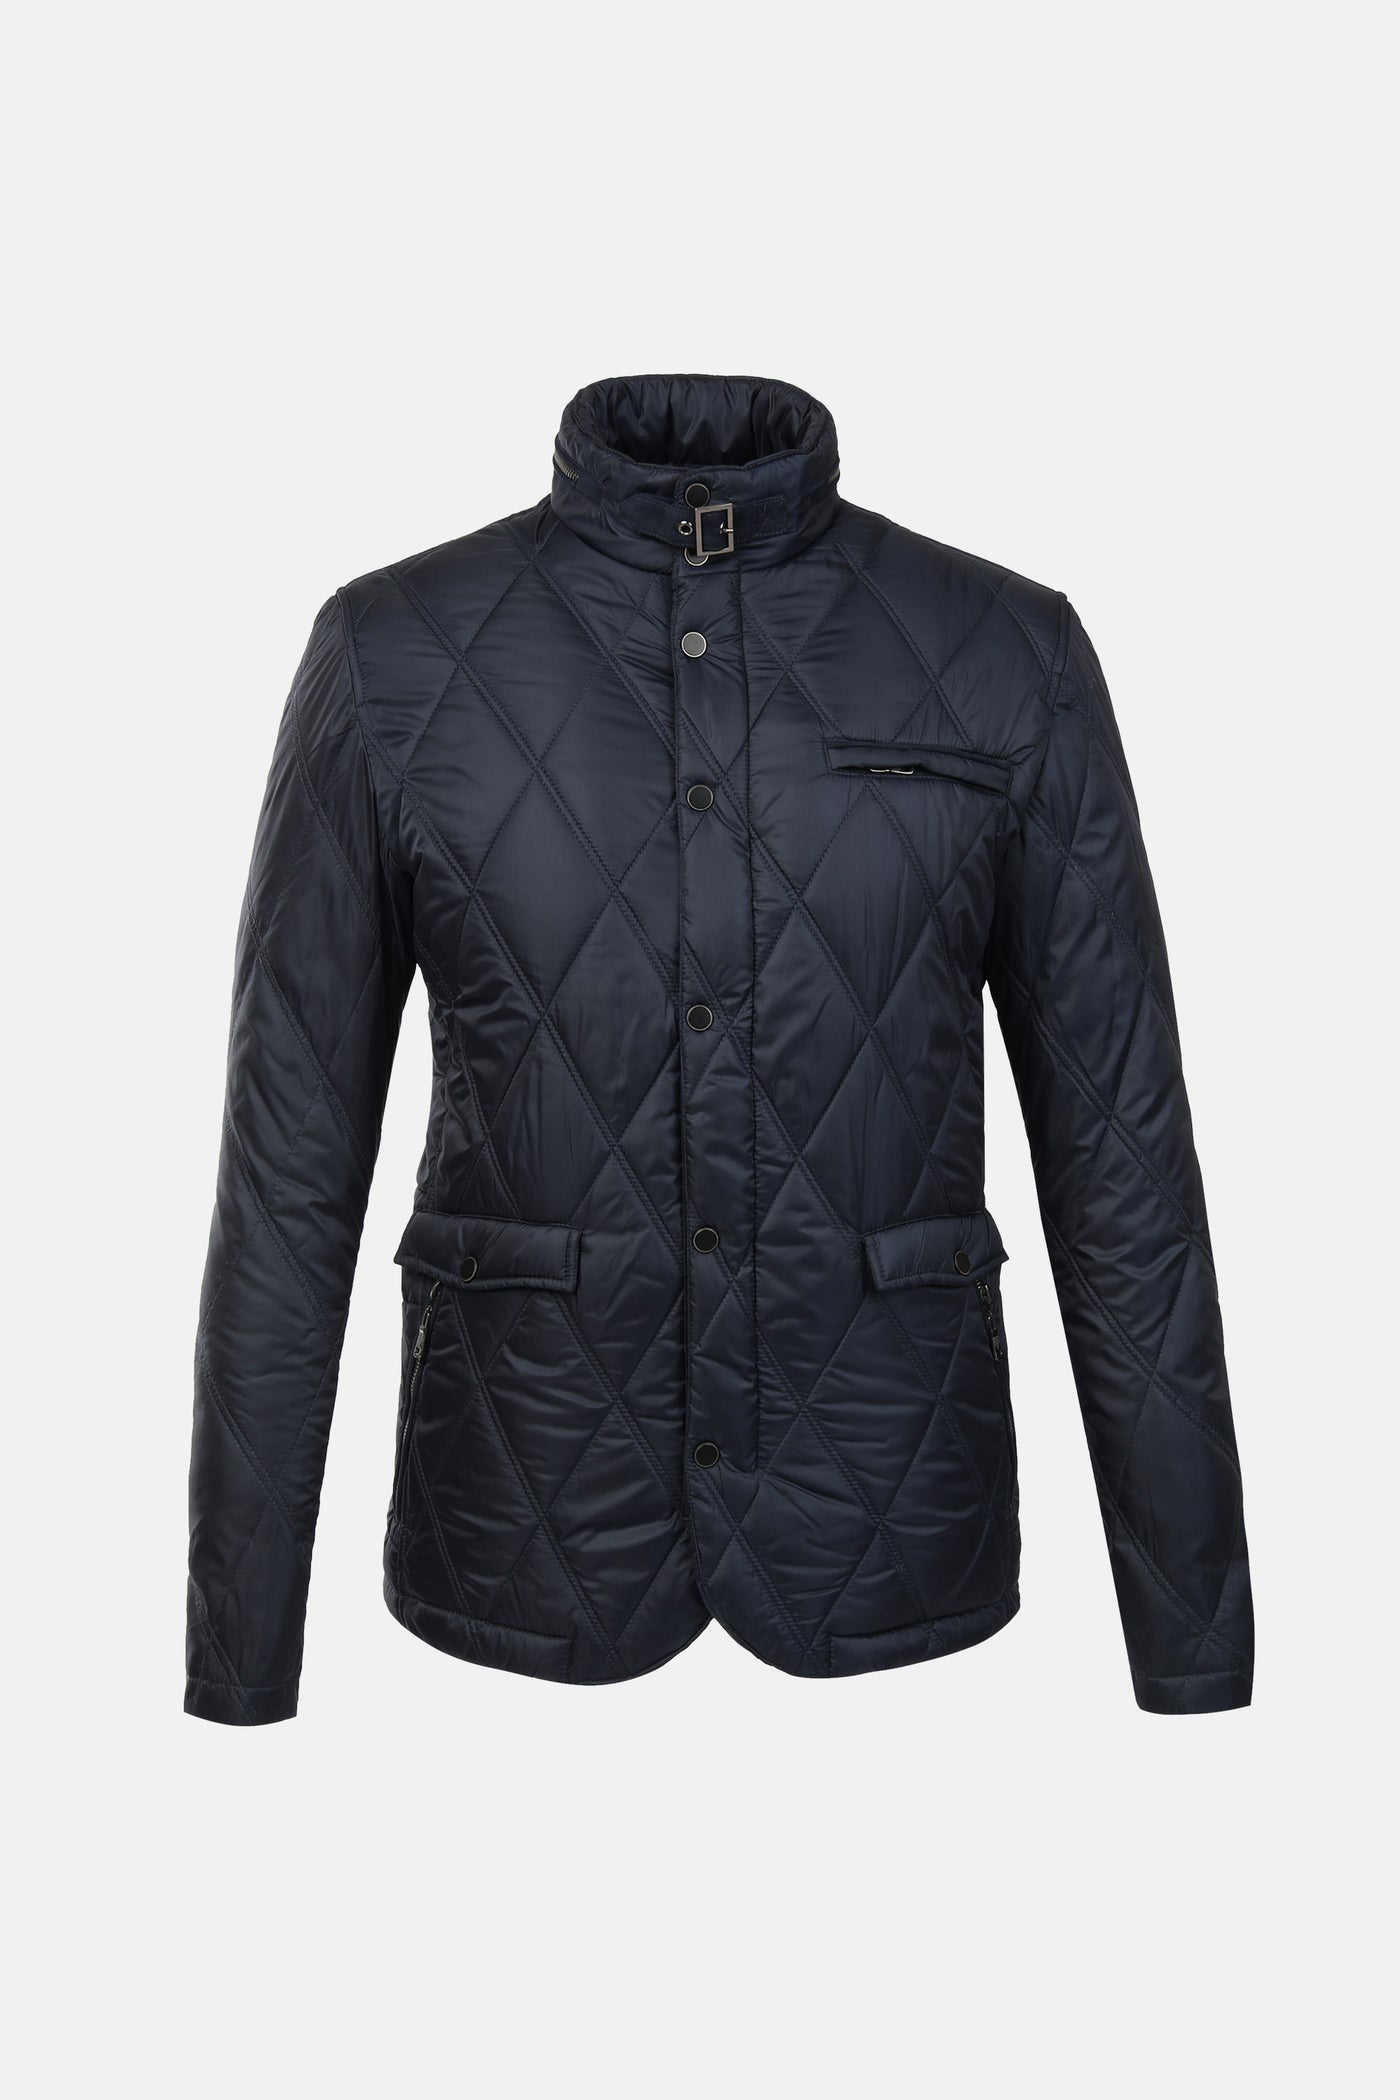 Diamond Shape Waterproof Dark Navy Sweater Jacket